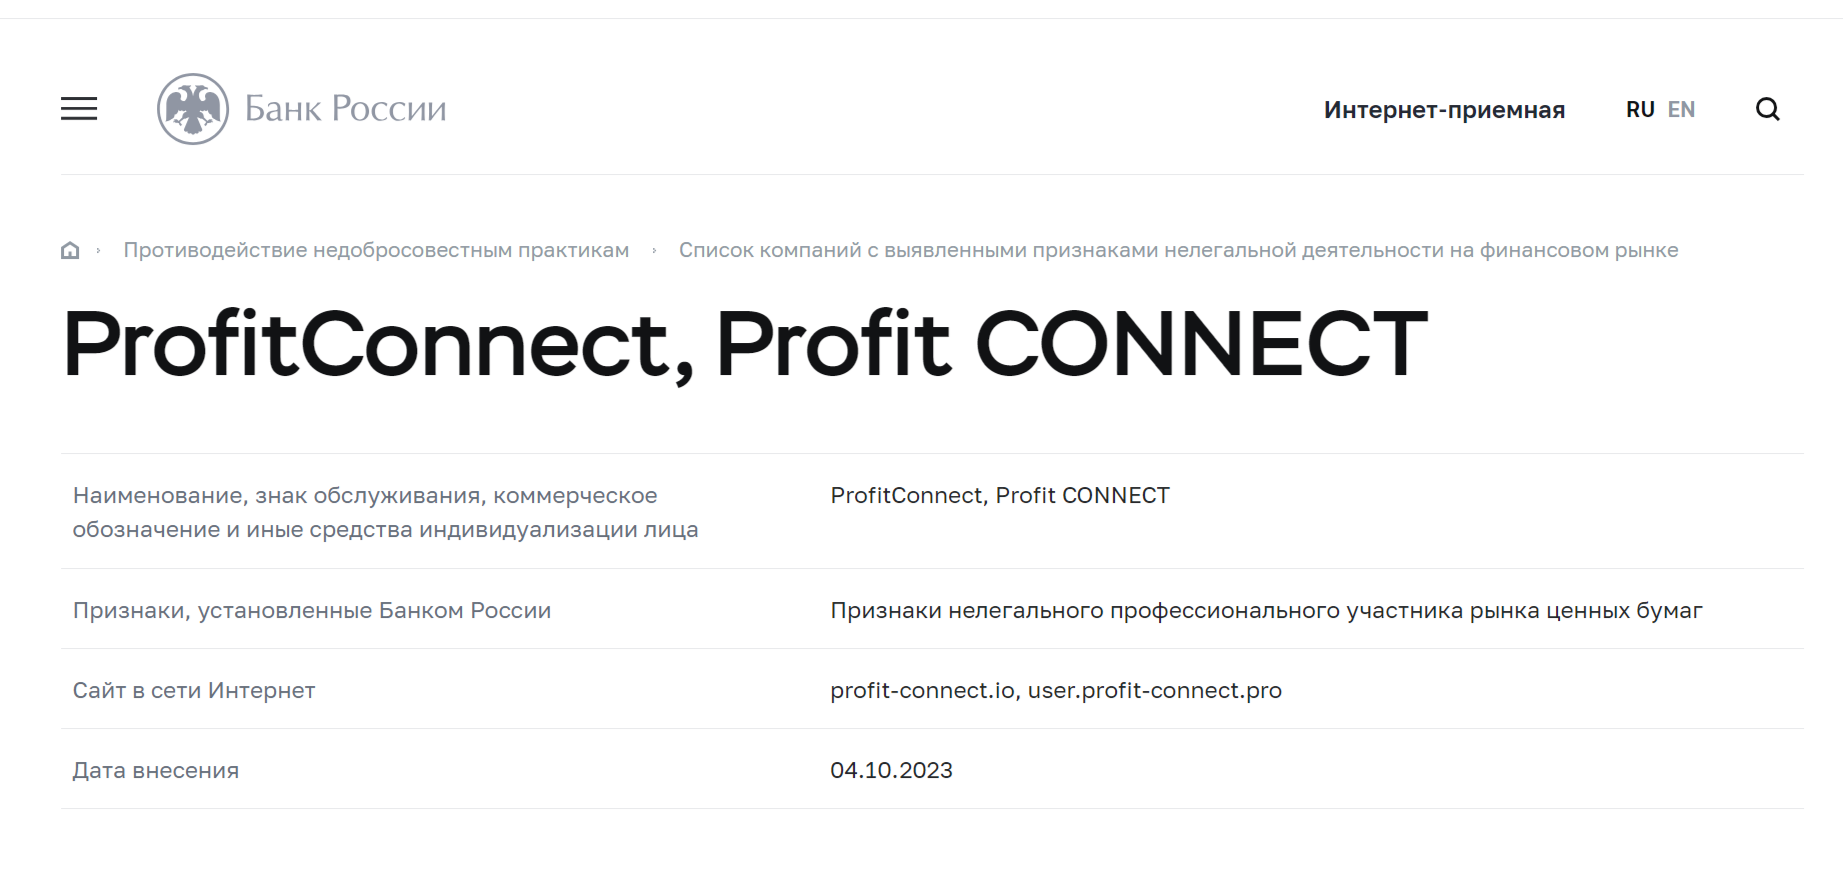 ProfitConnect